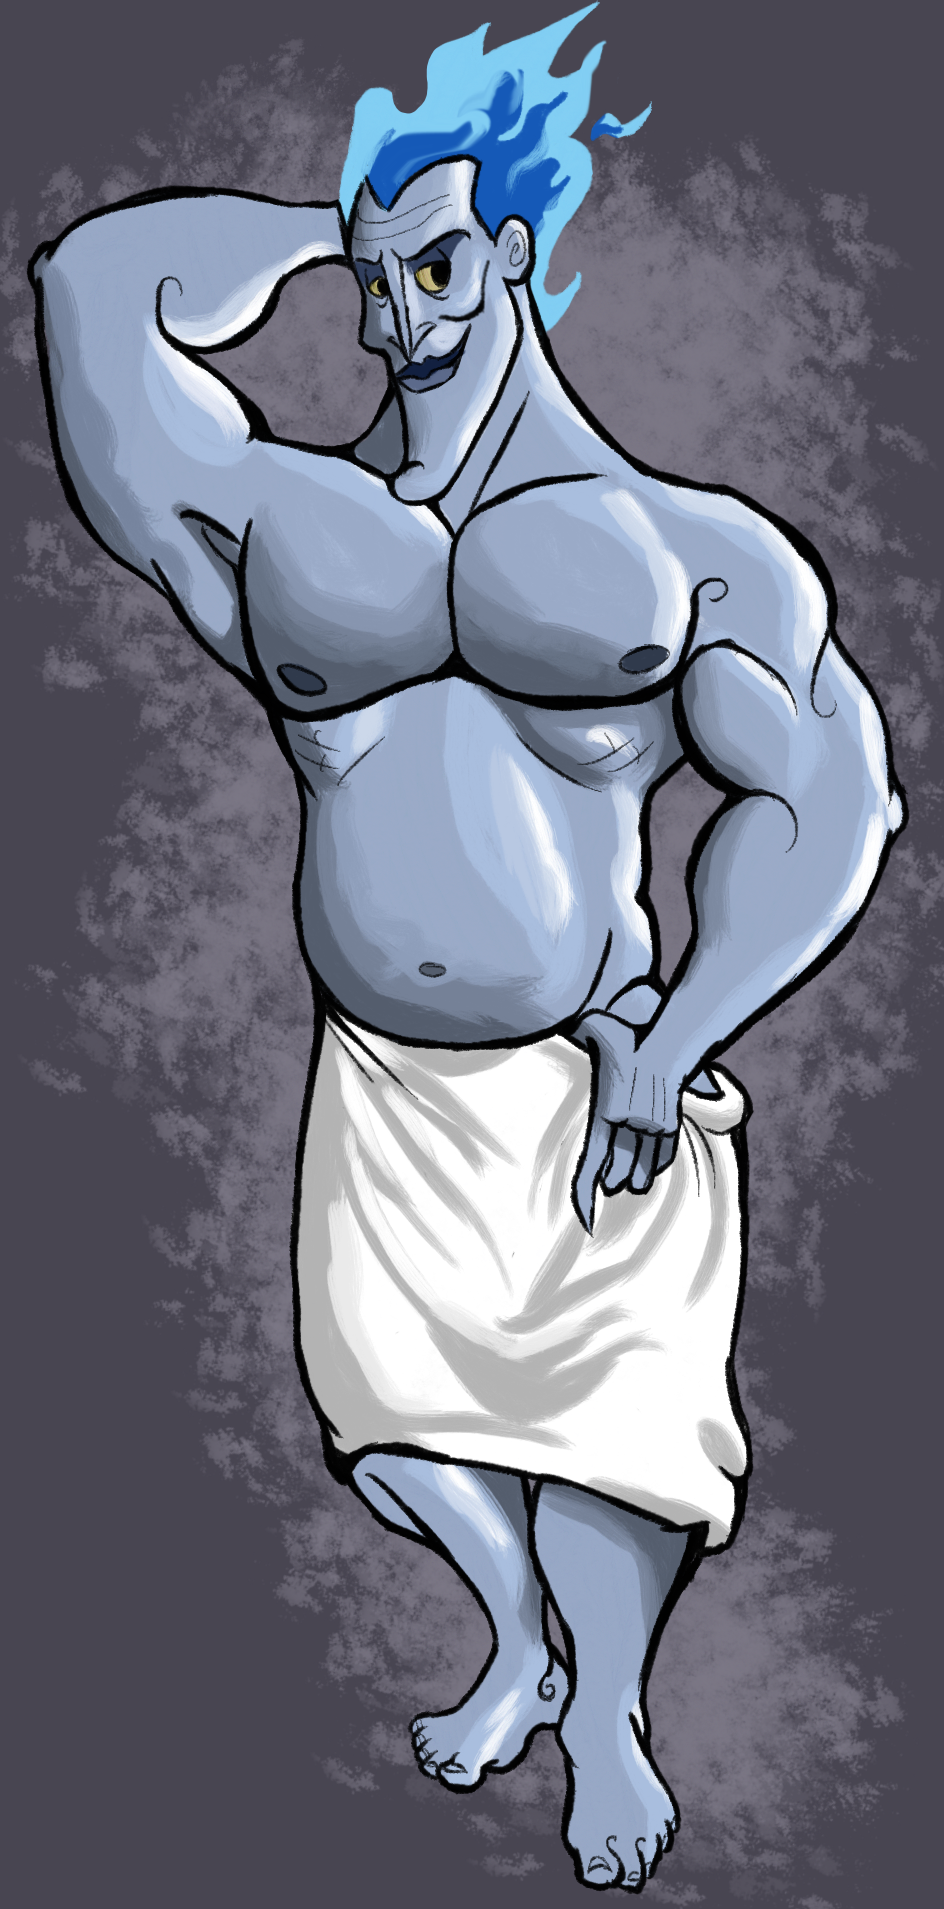 Hades In A towel